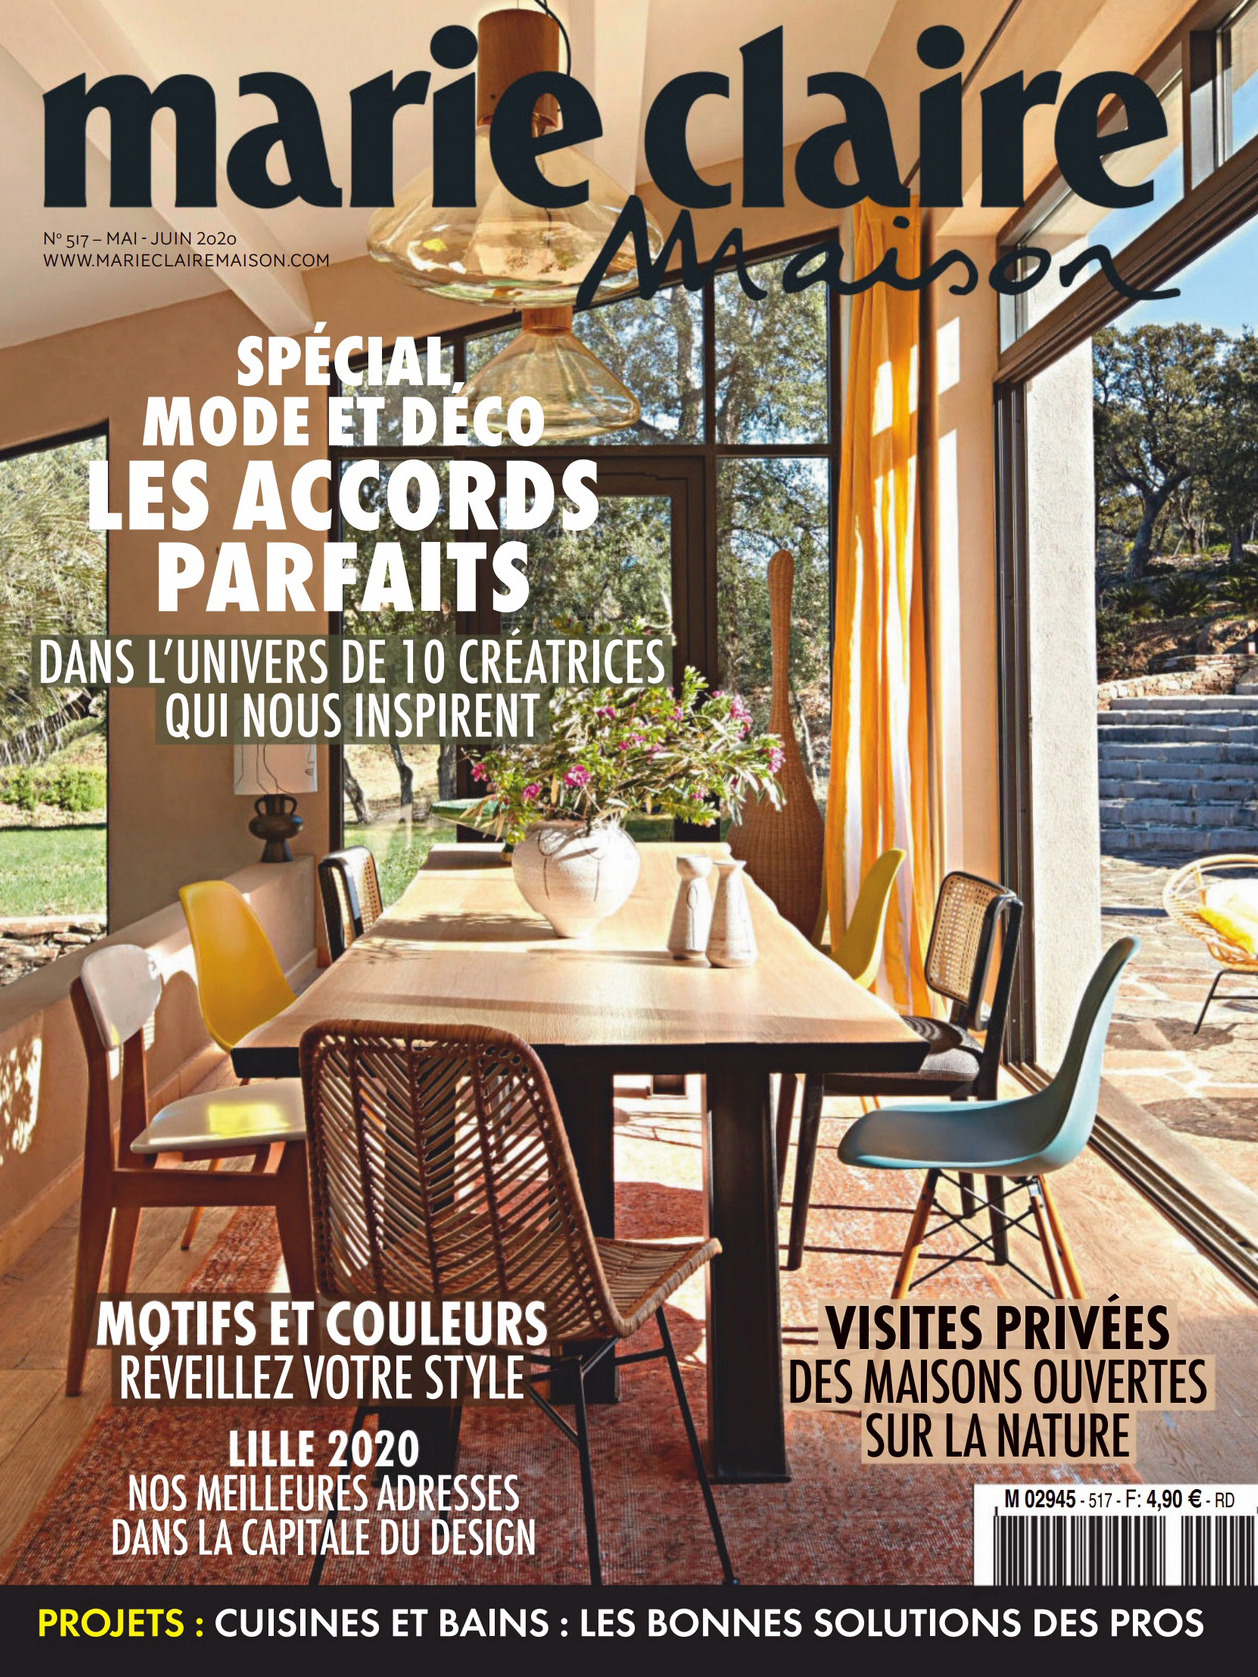 《Marie Claire maison》法国版时尚室内设计杂志2020年05-06月号